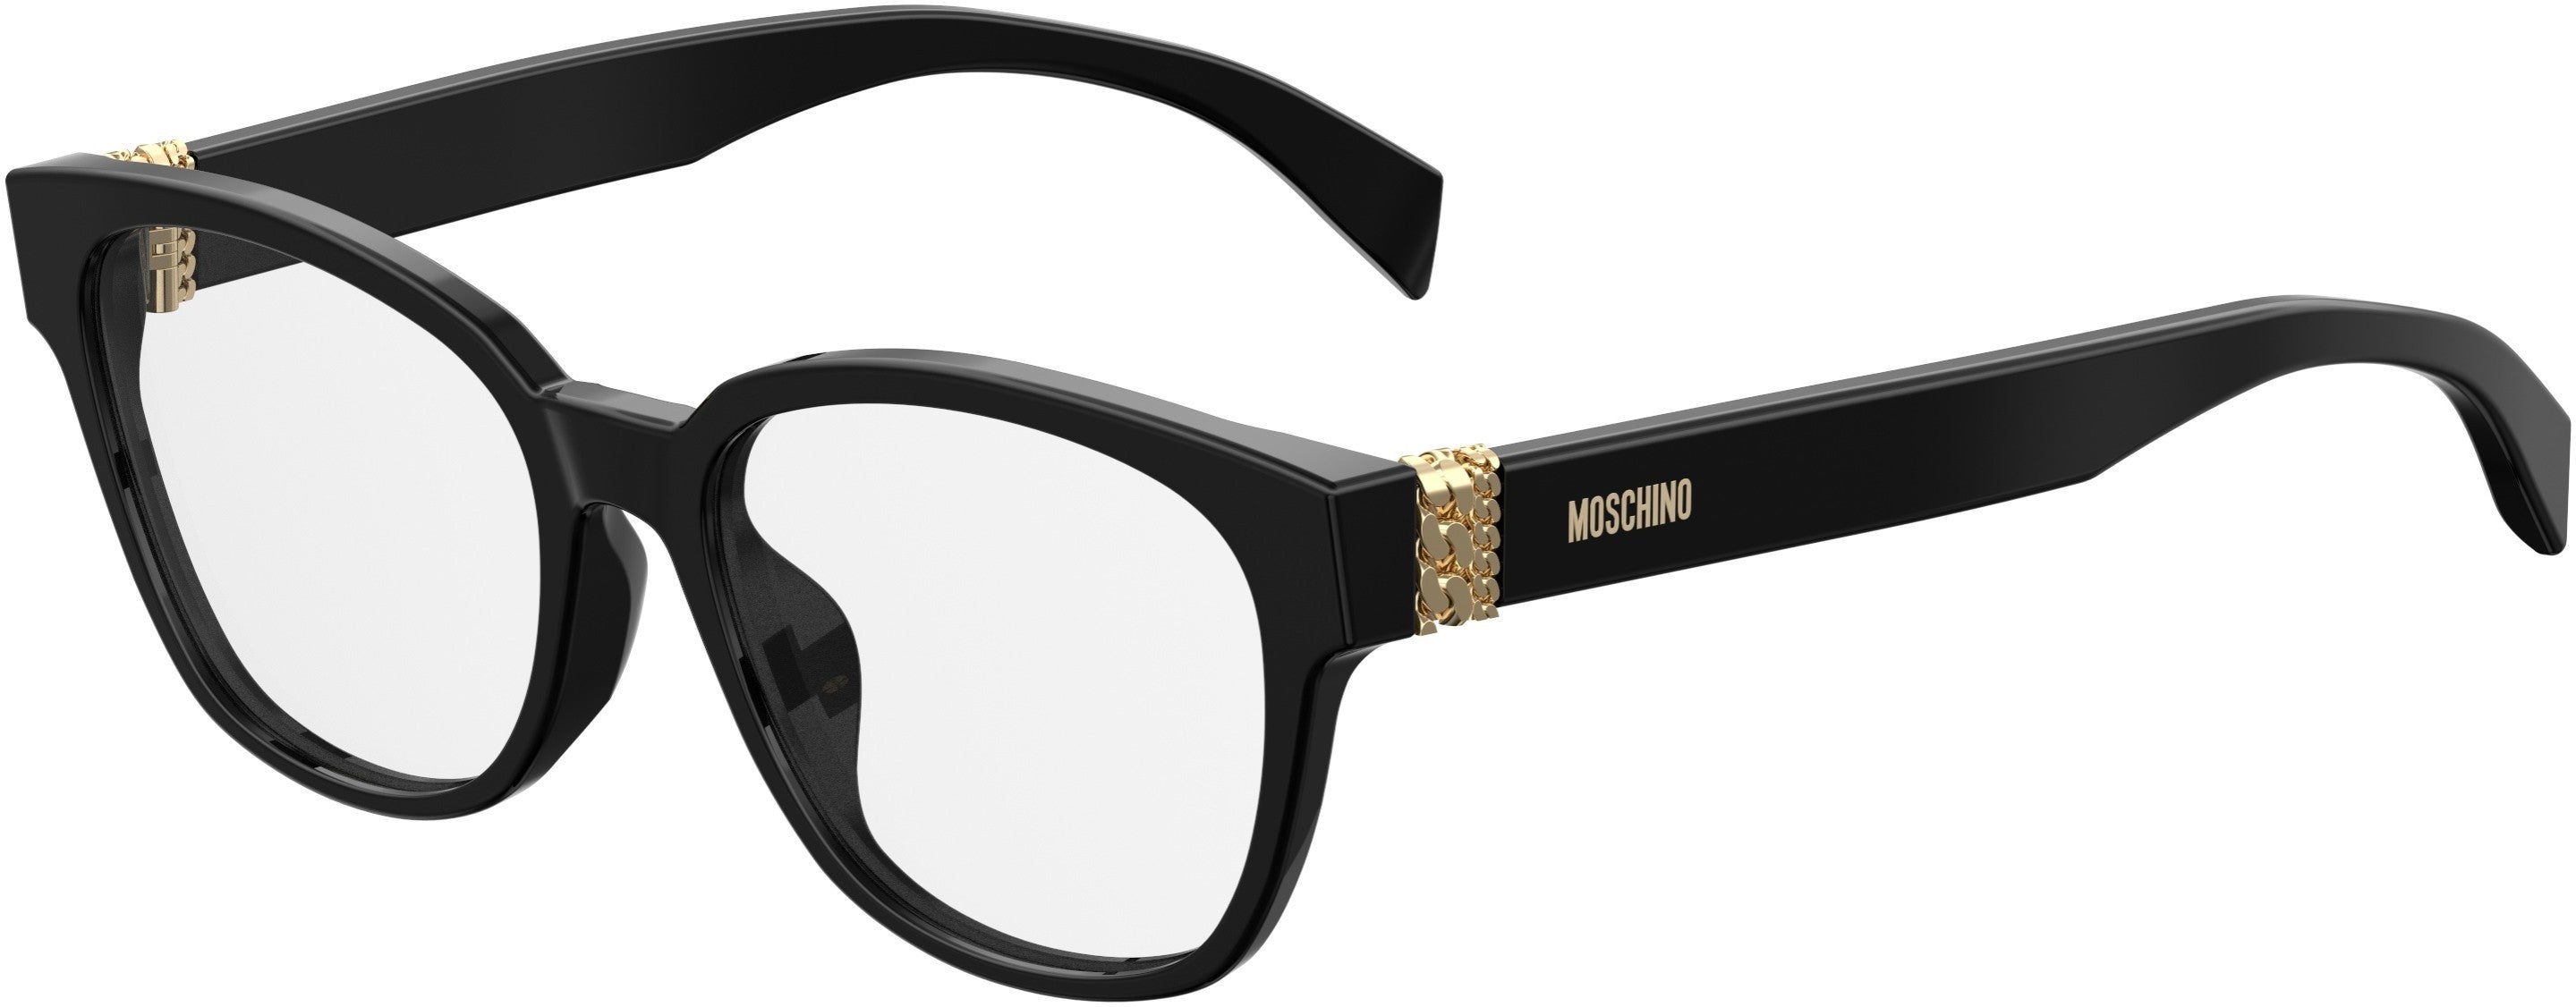  Moschino 524/F Square Eyeglasses 0807-0807  Black (00 Demo Lens)